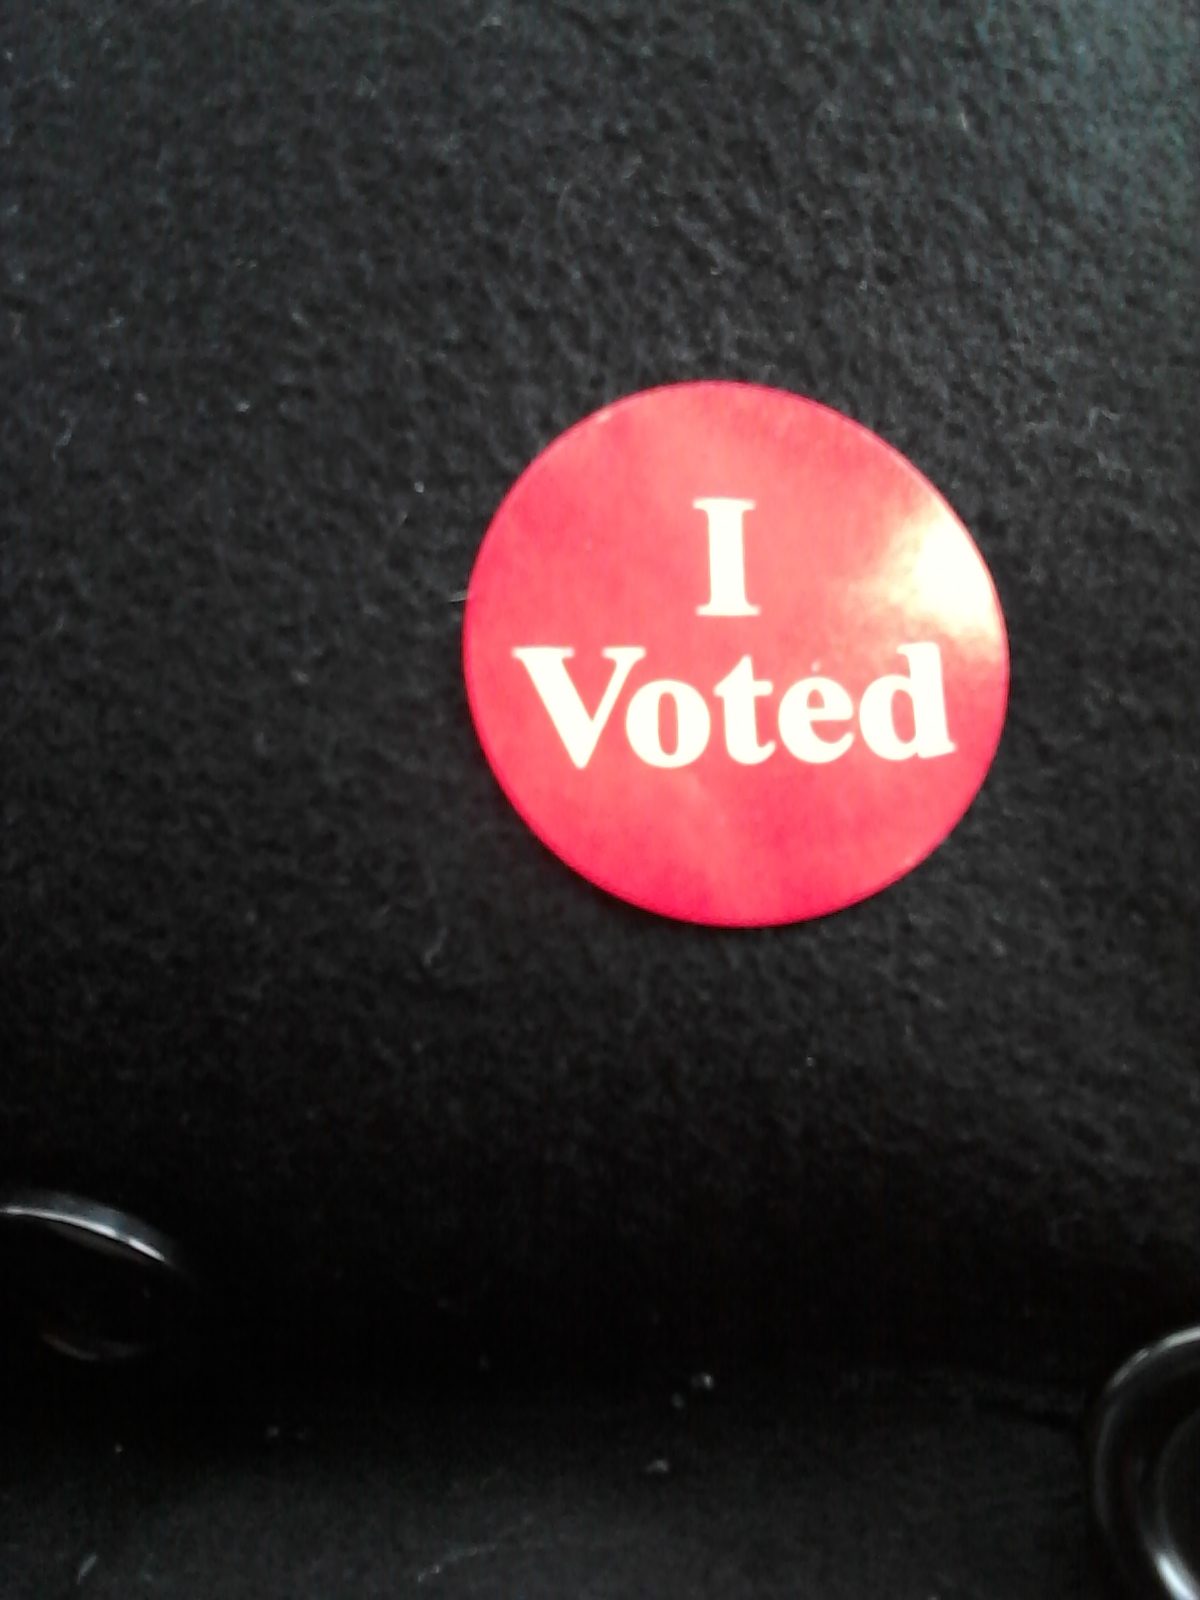 "I Voted" sticker, 2018.